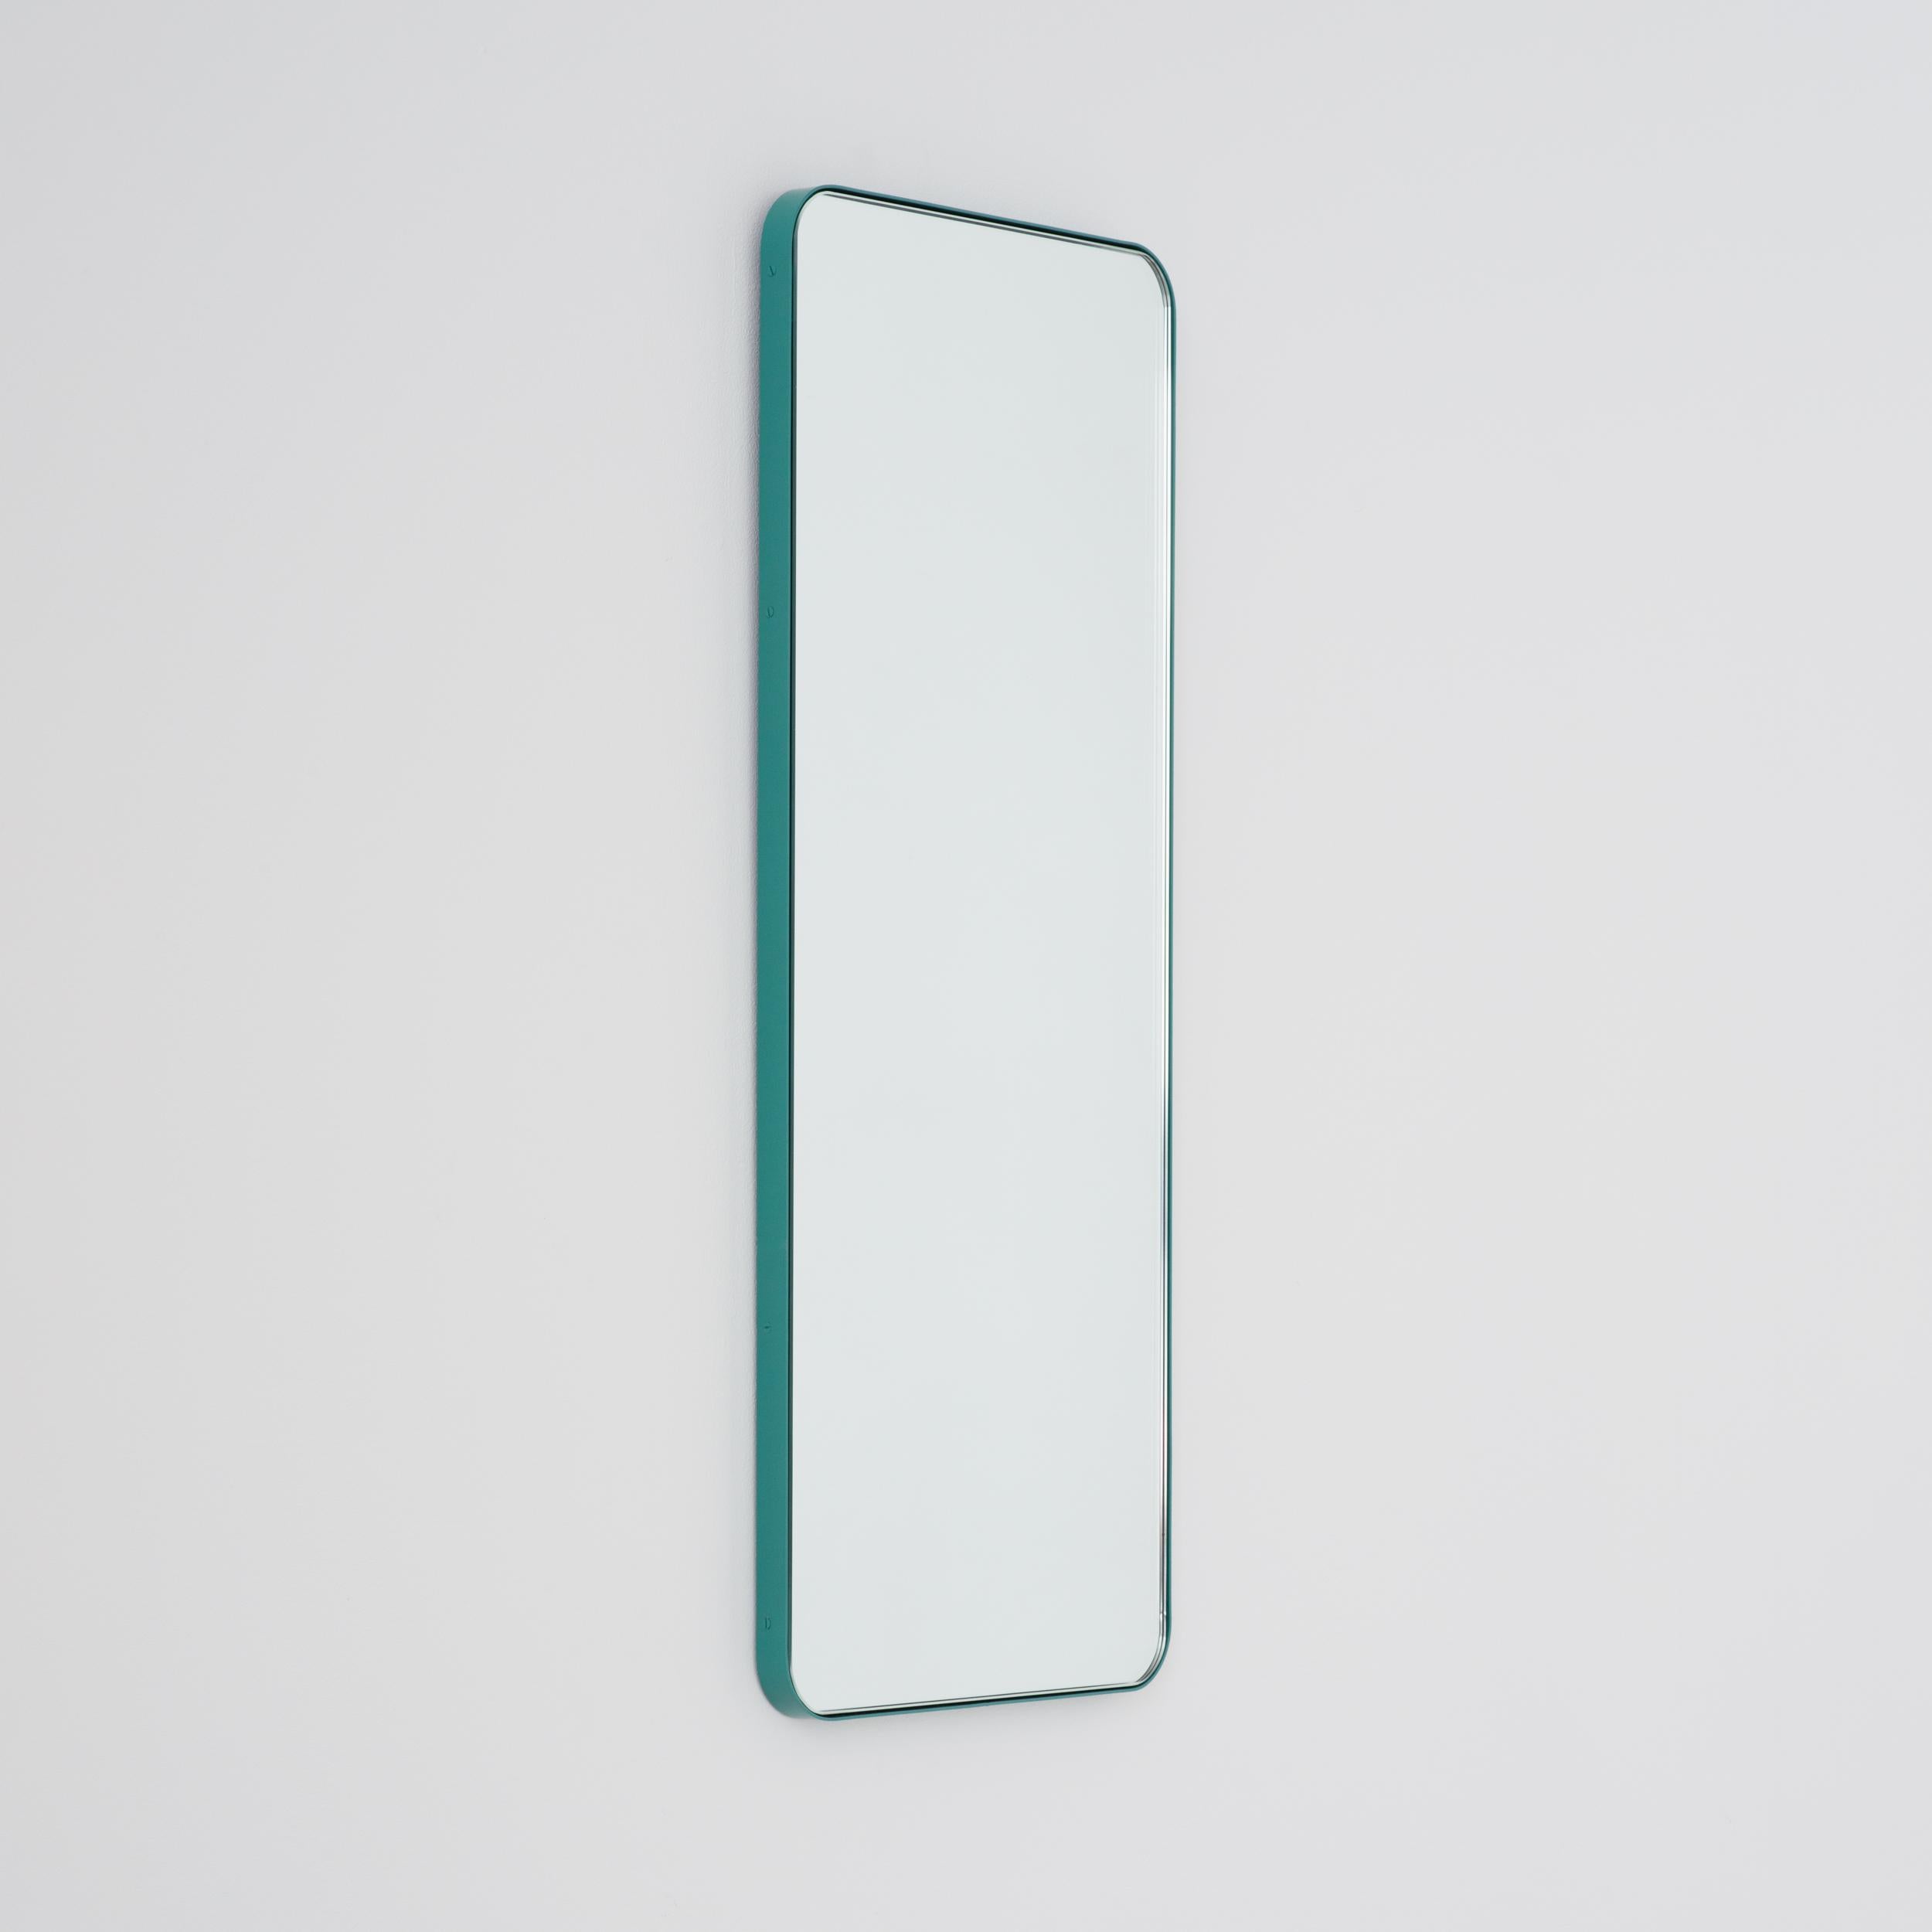 Aluminum Quadris Rectangular Modern Customisable Mirror with Mint Turquoise Frame, Medium For Sale